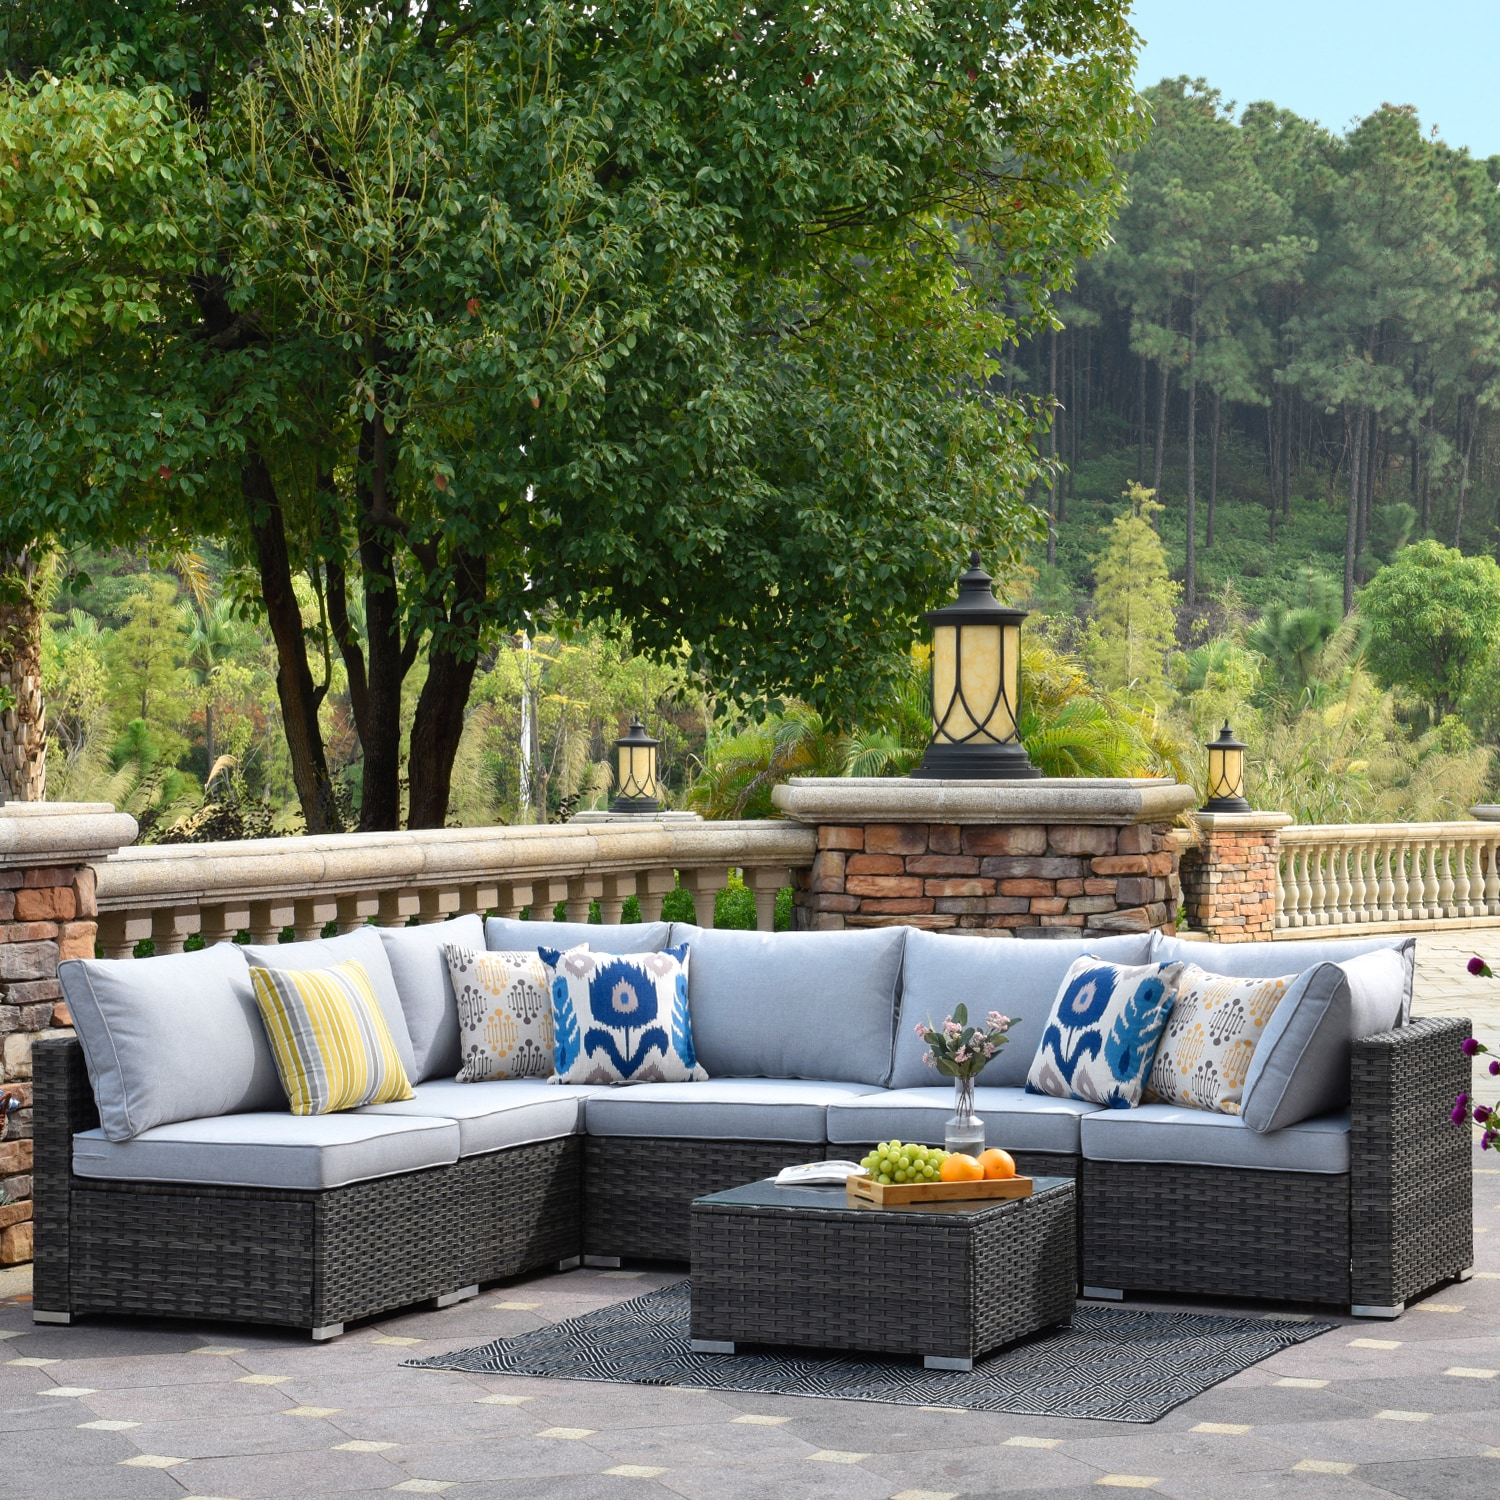 Outdoor Wicker Sofa Set Patio Rattan Sectional Furniture Garden Deck Couch Brown 